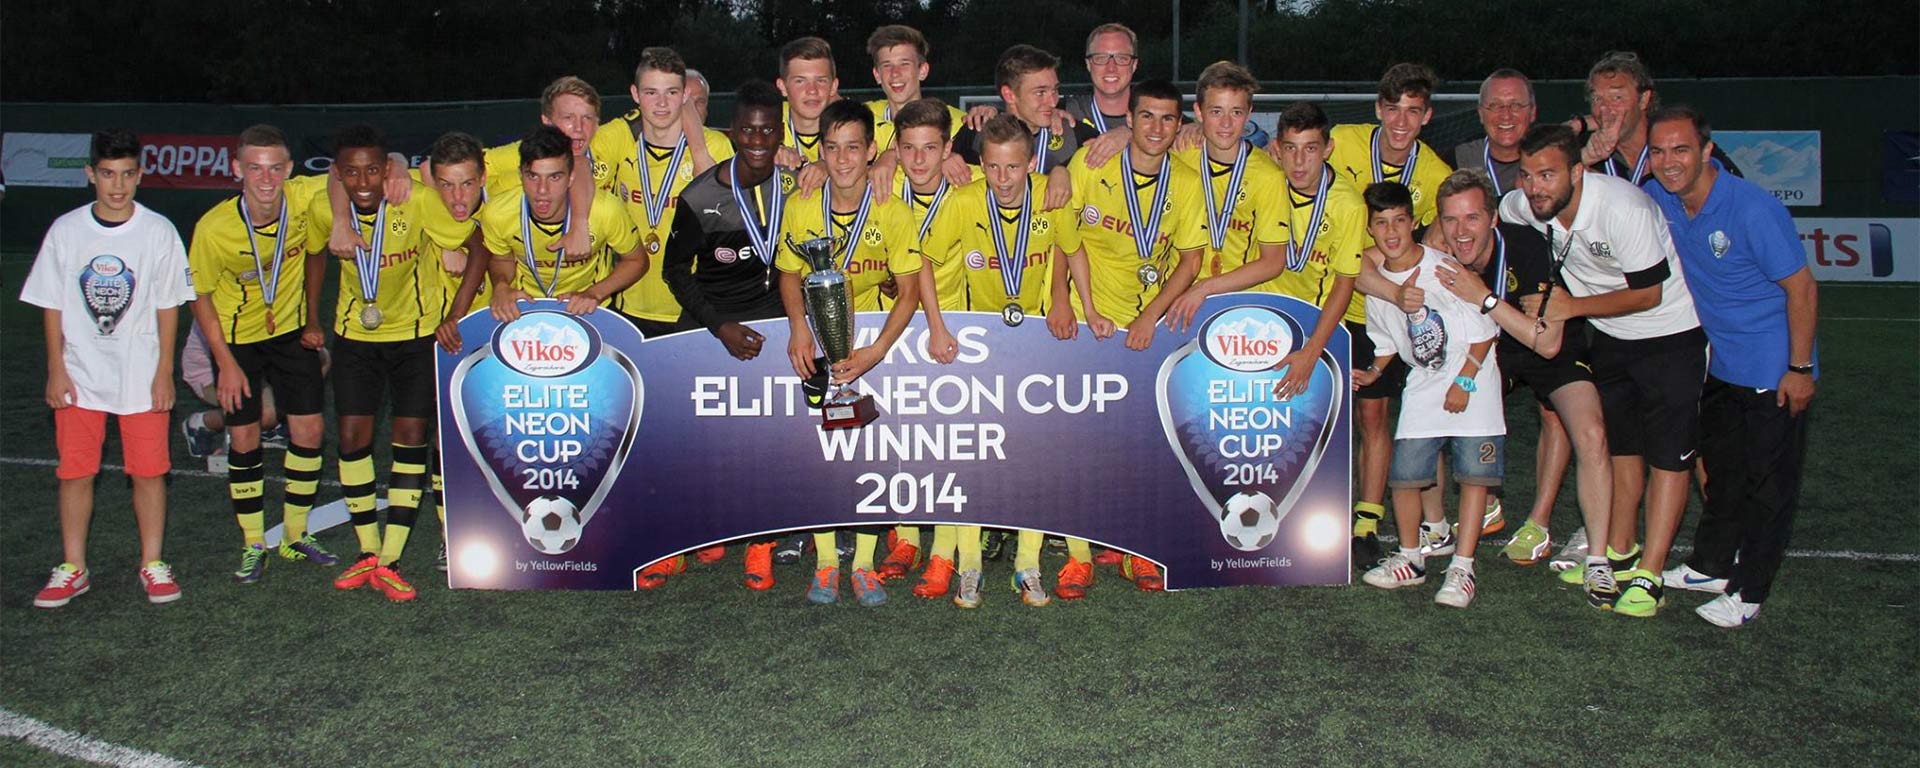 Vikos Elite Neon Cup 2014